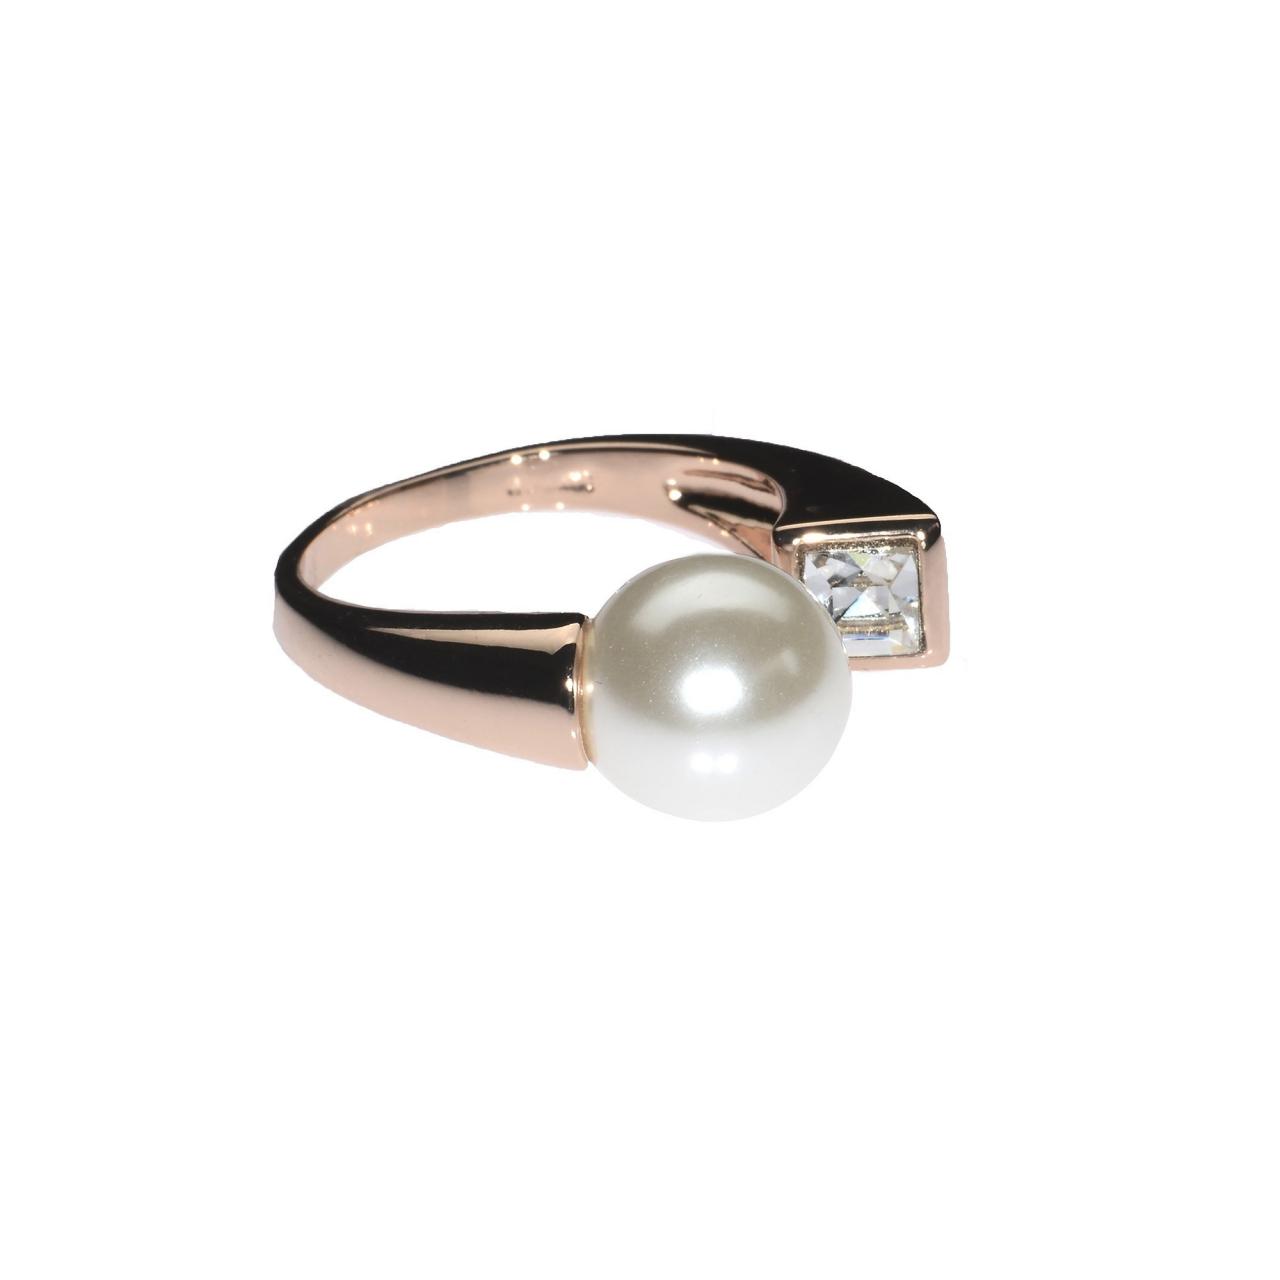 Pearl Ring / Rose Gold Ring / Wrap Around Ring / Zircon / Classy Ring / Fashion Ring / Cocktail Ring / Evening Ring / Open Ring / Bling Ring